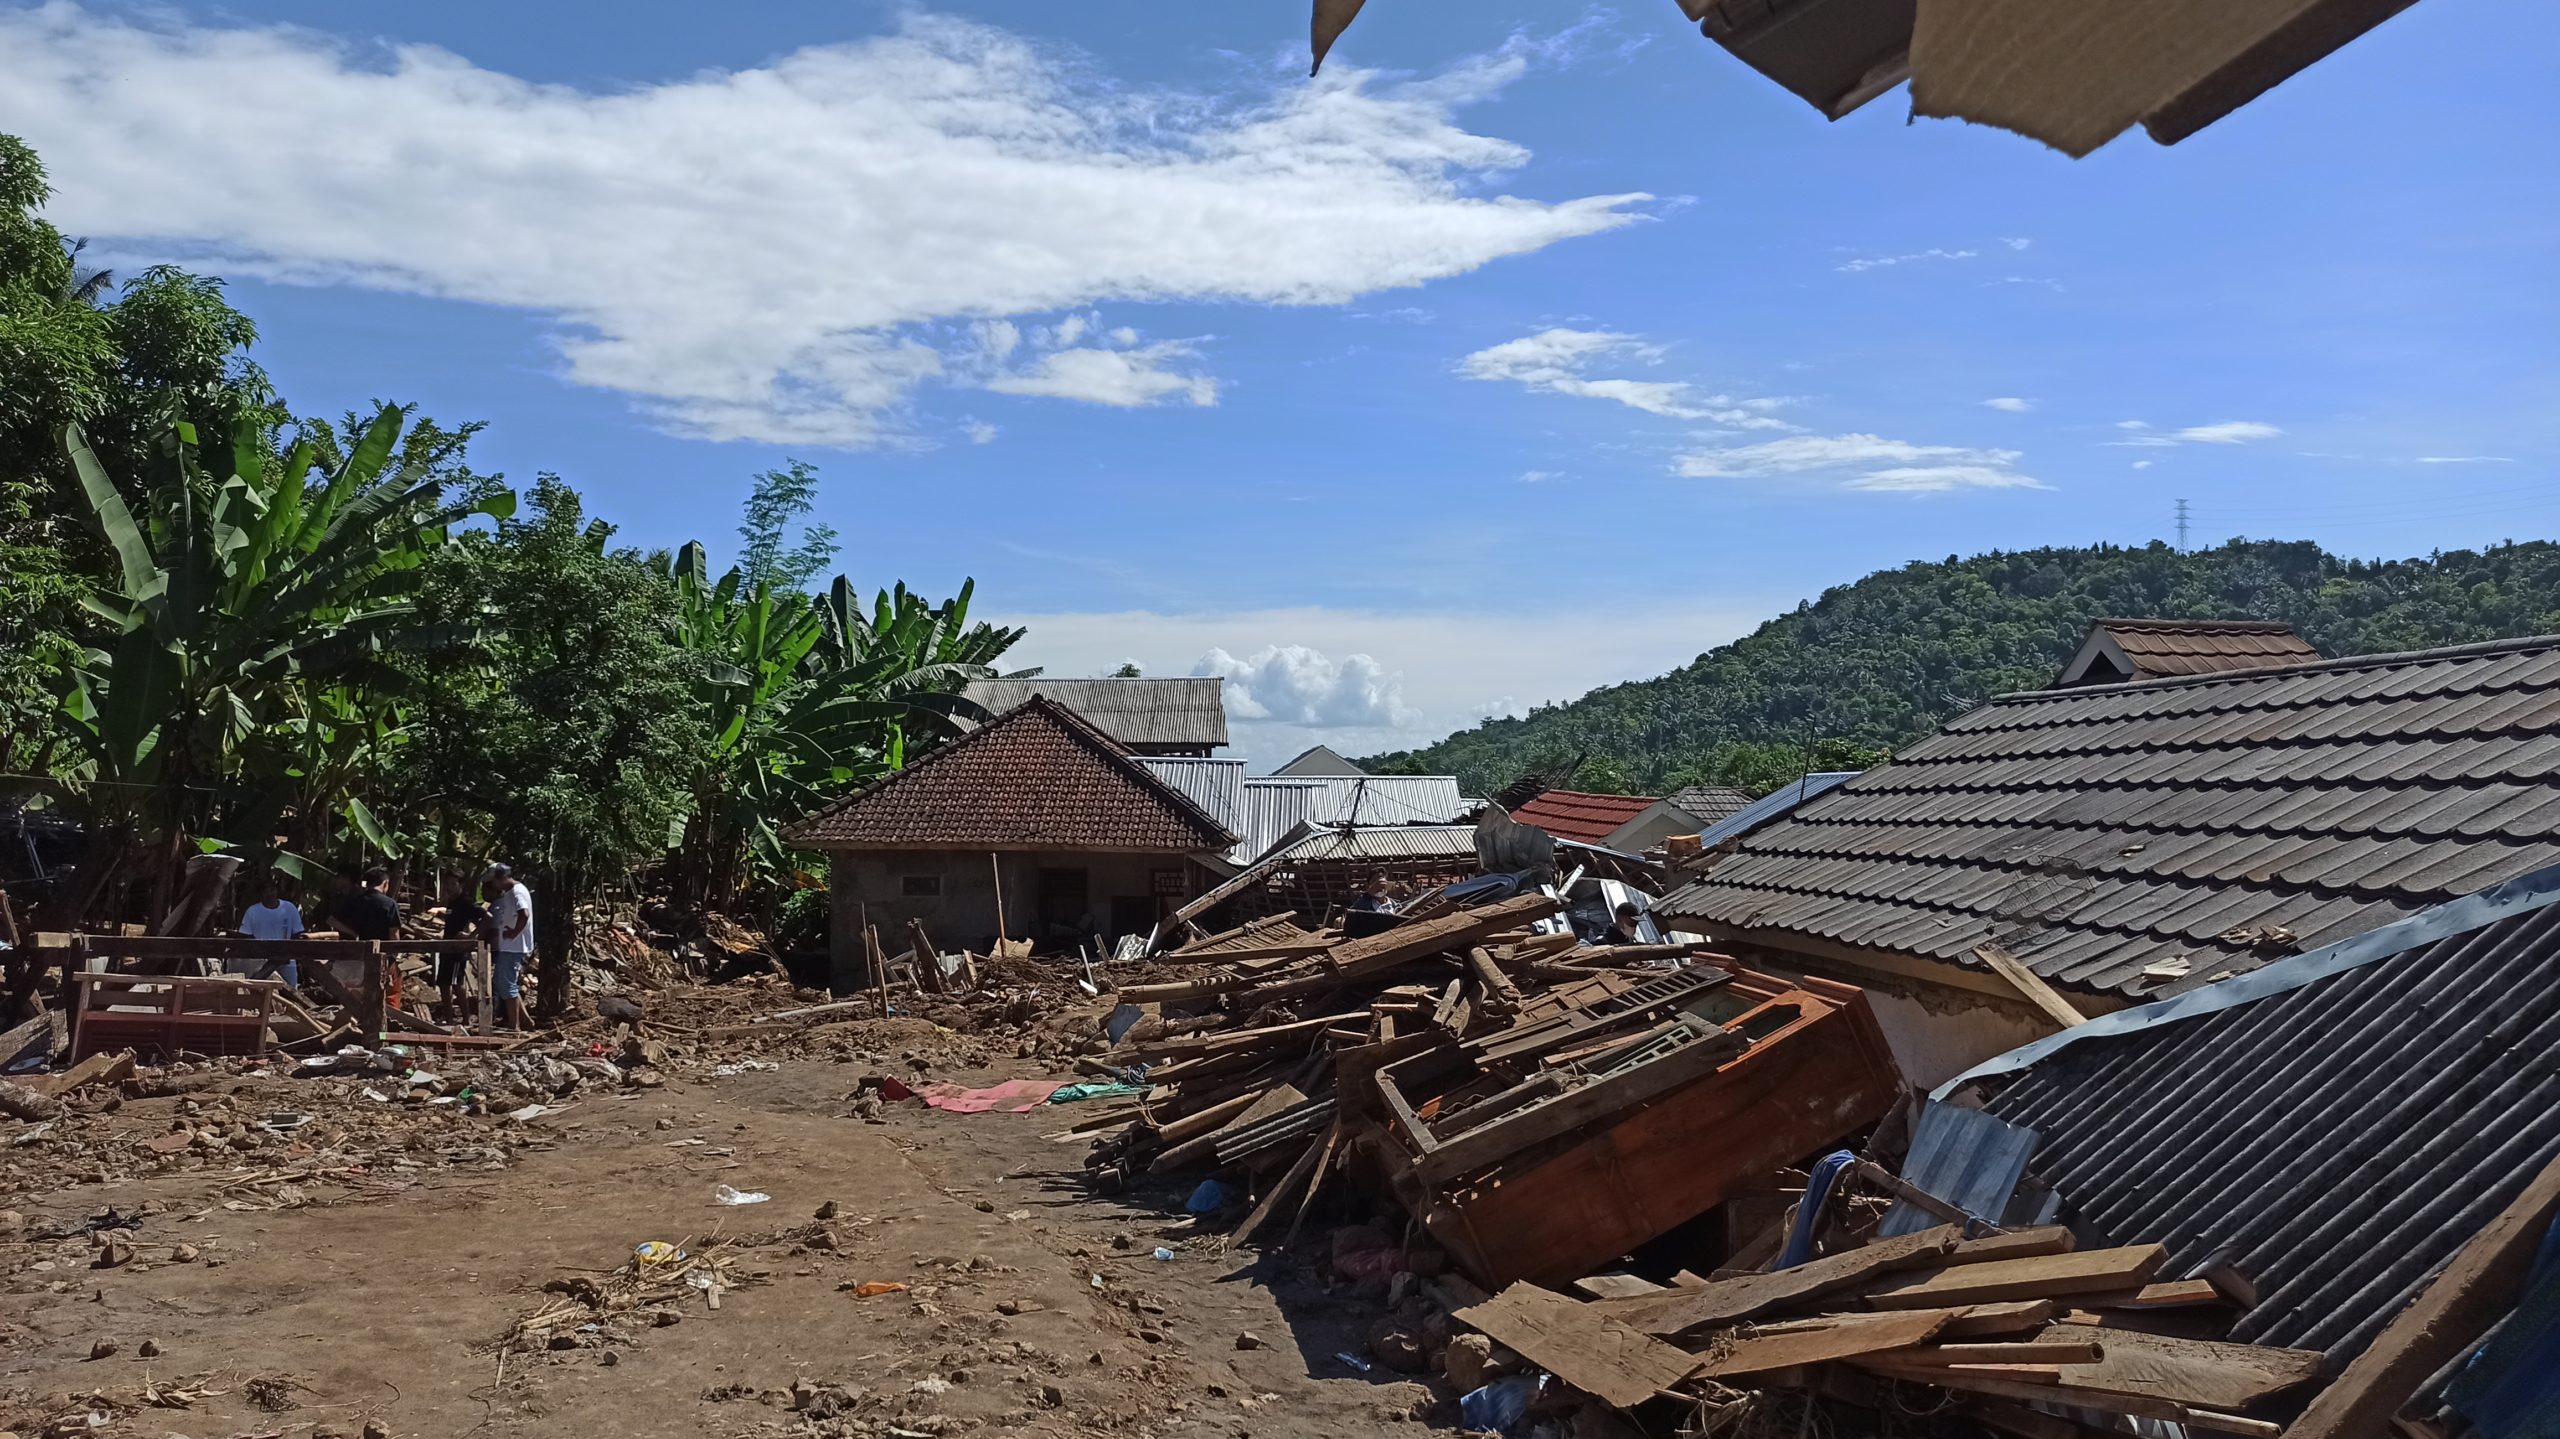 Rumah warga rusak berat dan terendam lumpur di Kekait Daye, Kecamatan Gunungsari, Lombok Barat. Rumah yang rusak ini merupakan rumah tahan gempa yang baru selesai dibangun setahun sebelumnya. Foto: Fathul Rakhman/Mongabay Indonesia